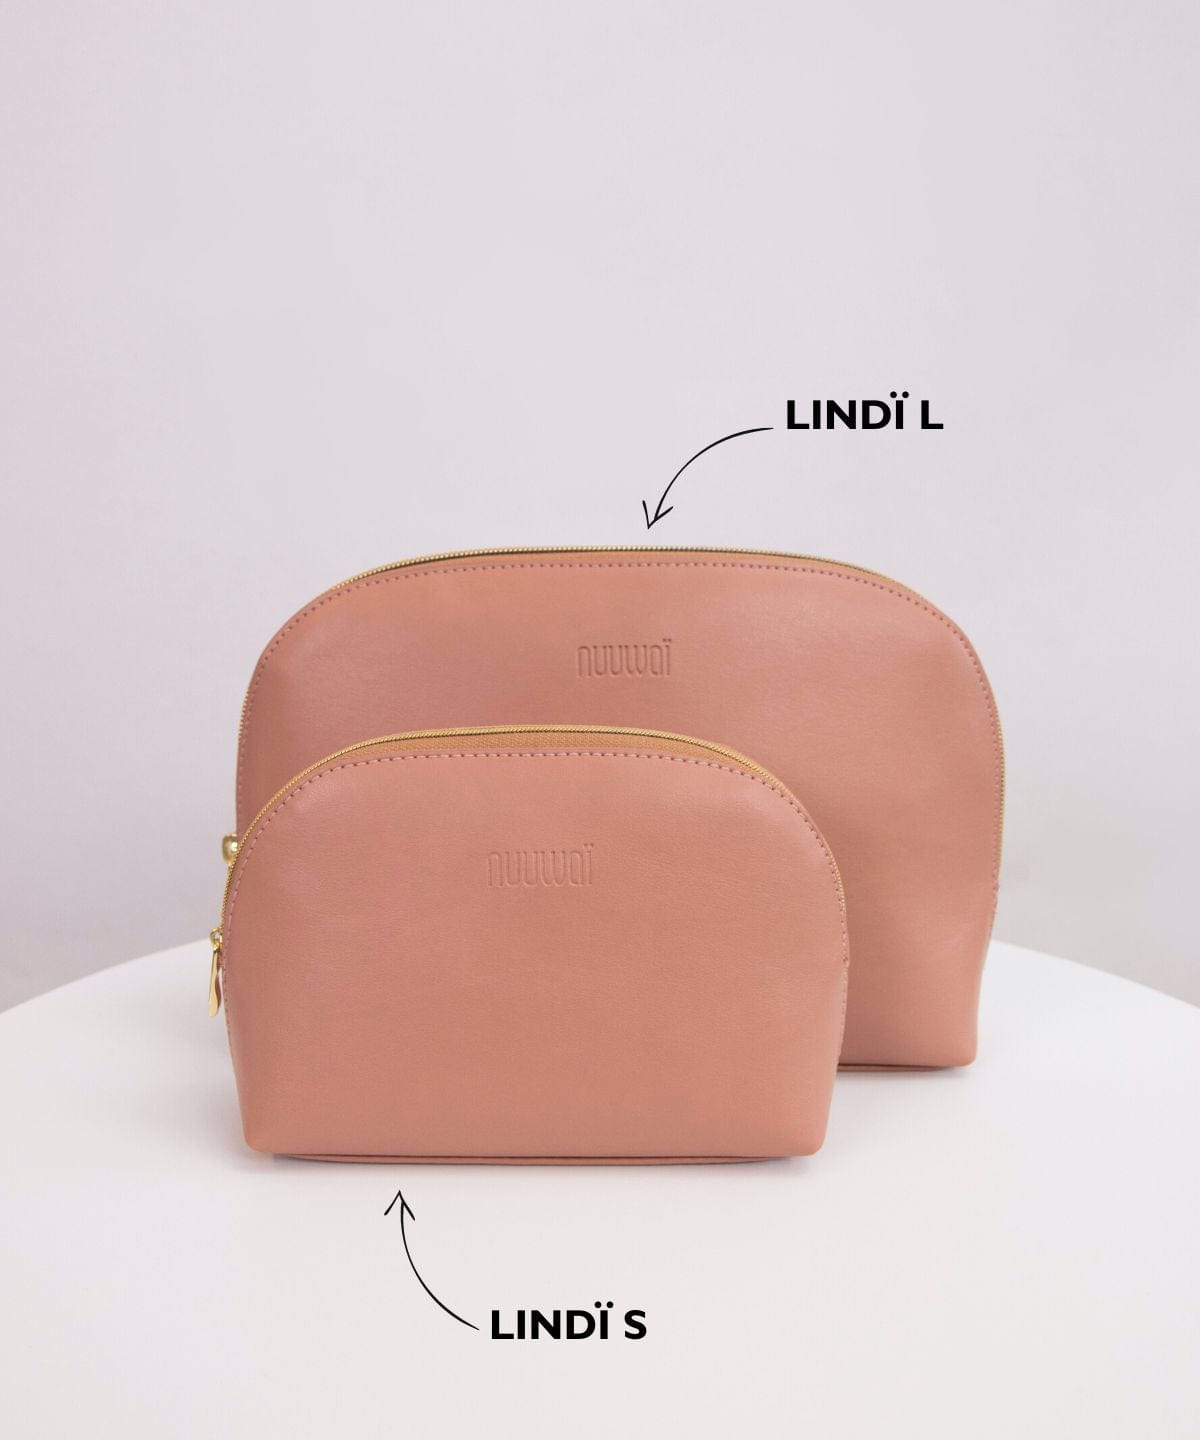 nuuwaï Handtaschen nuuwaï - Vegan Makeup Bag Large - LINDI L millennial pink bæredygtig mode etisk mode